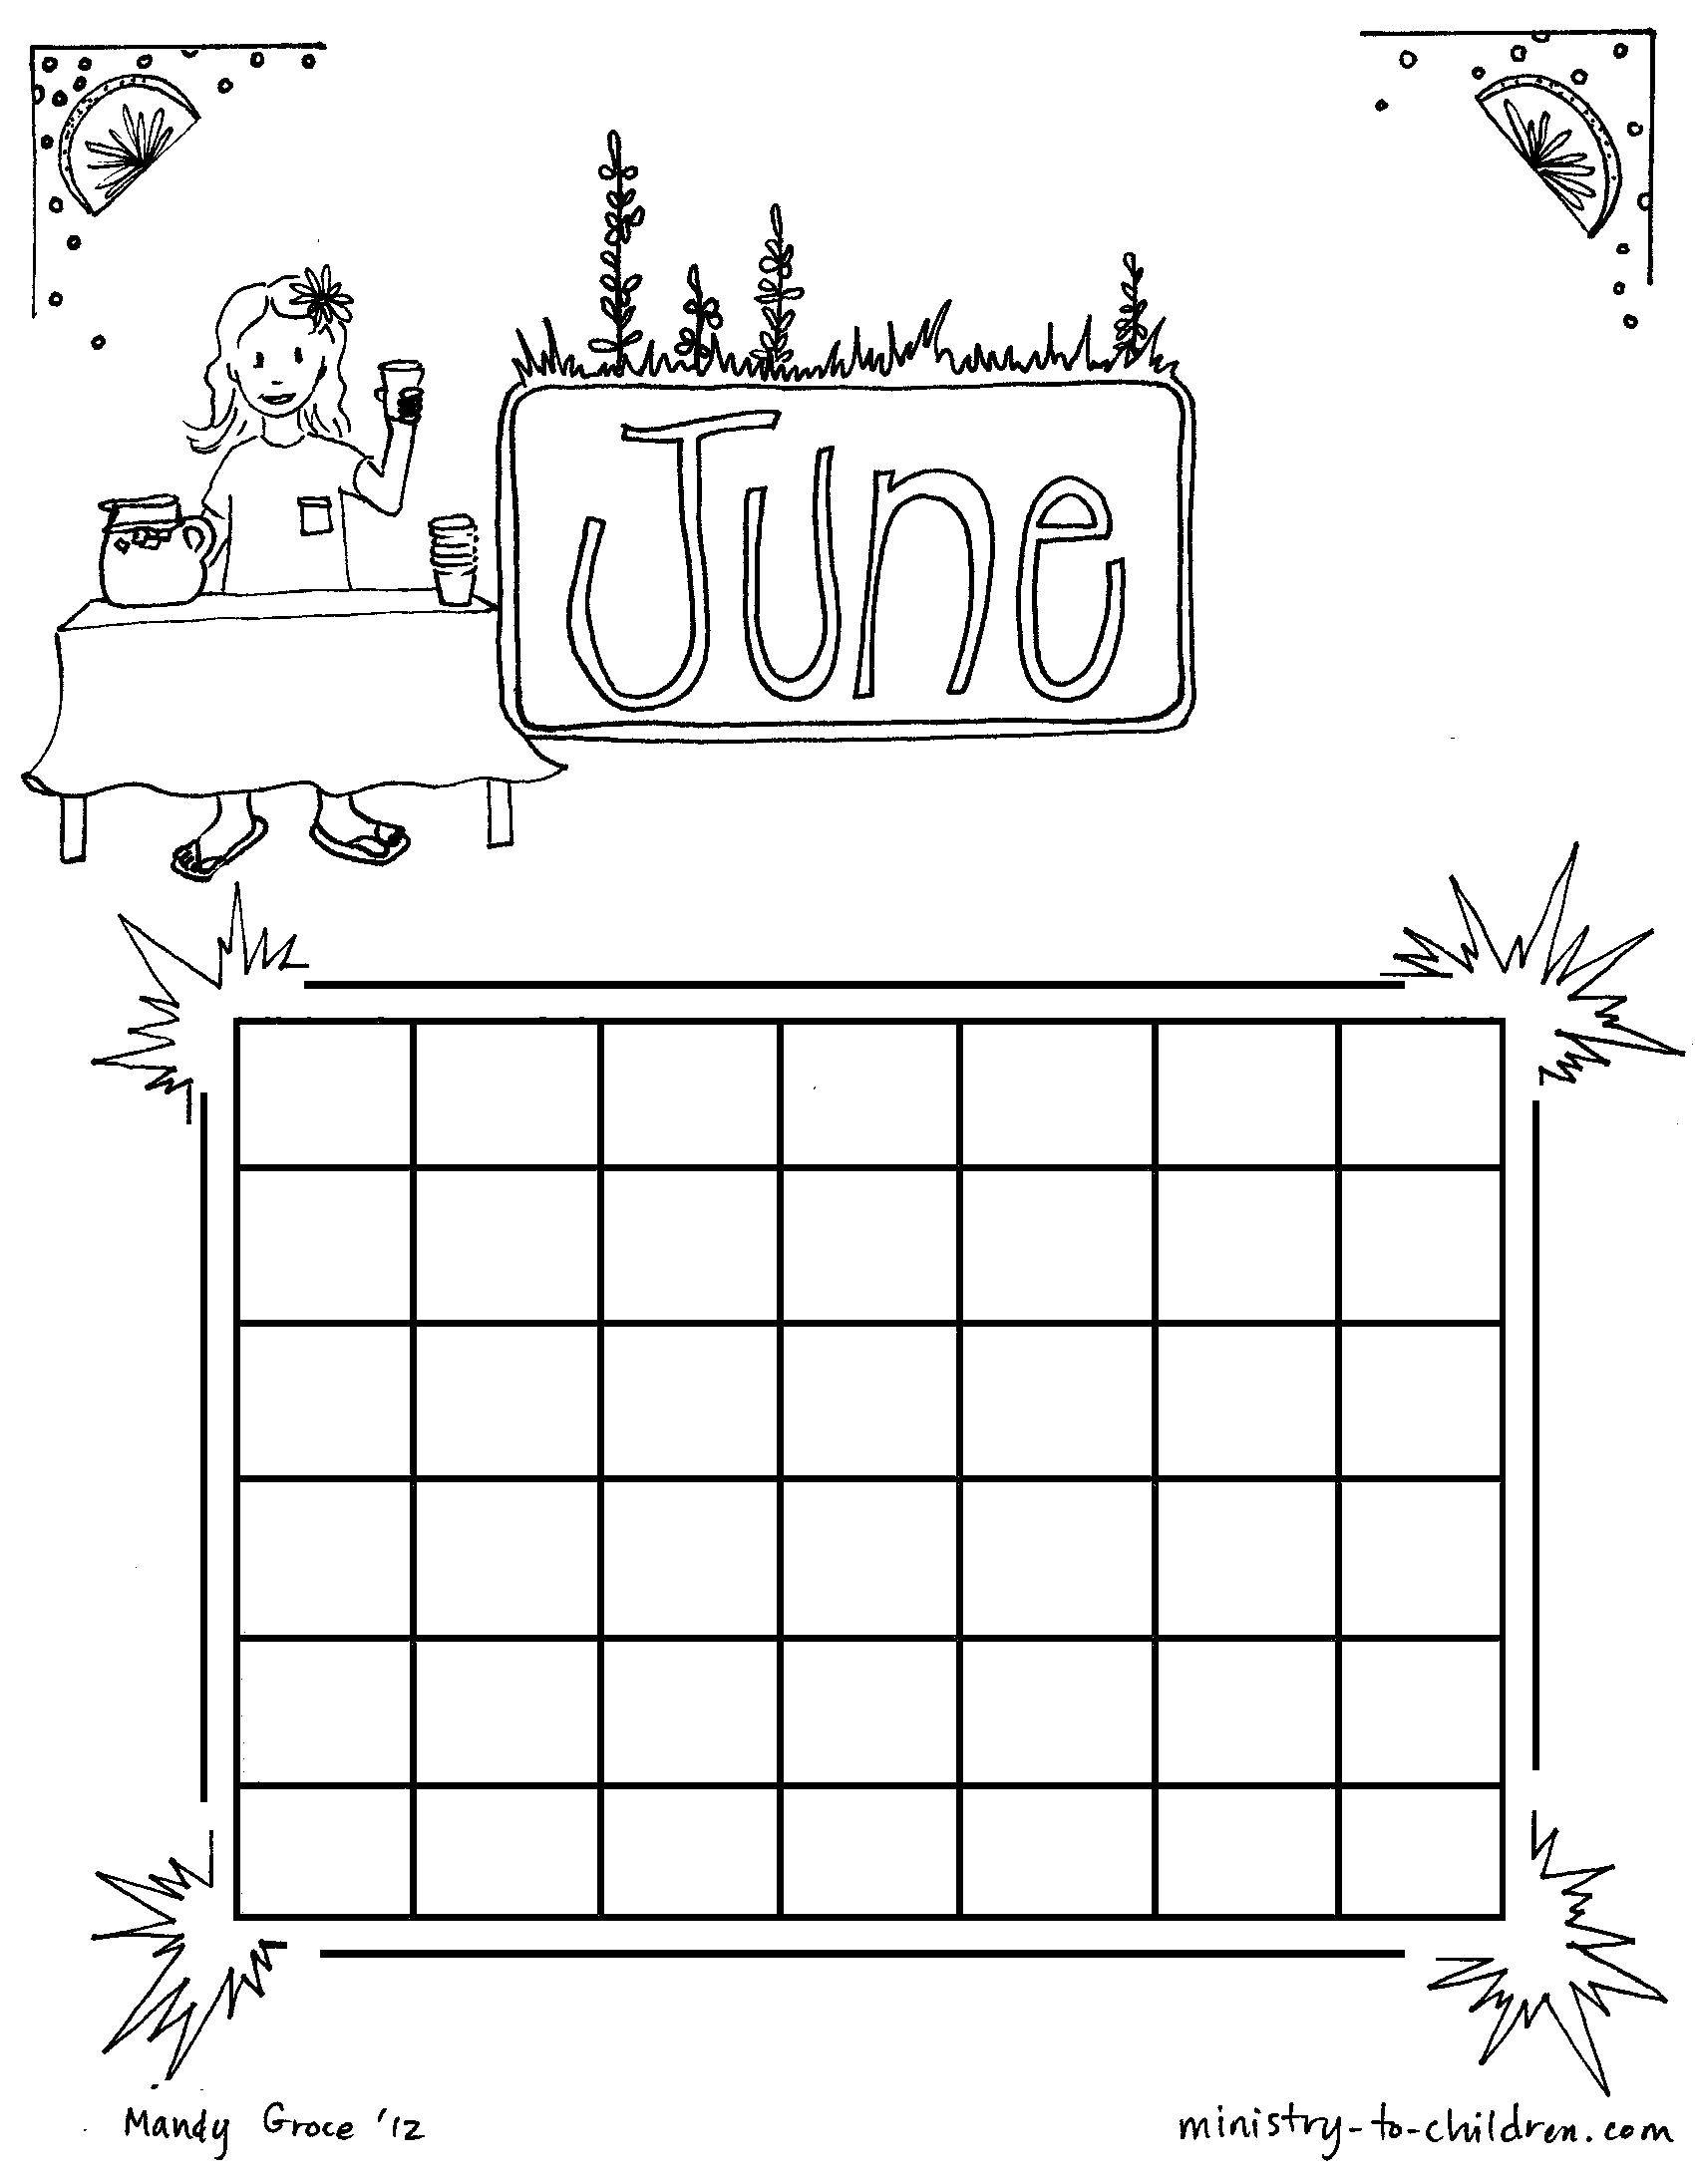 Coloring June. Category Calendar. Tags:  calendar.